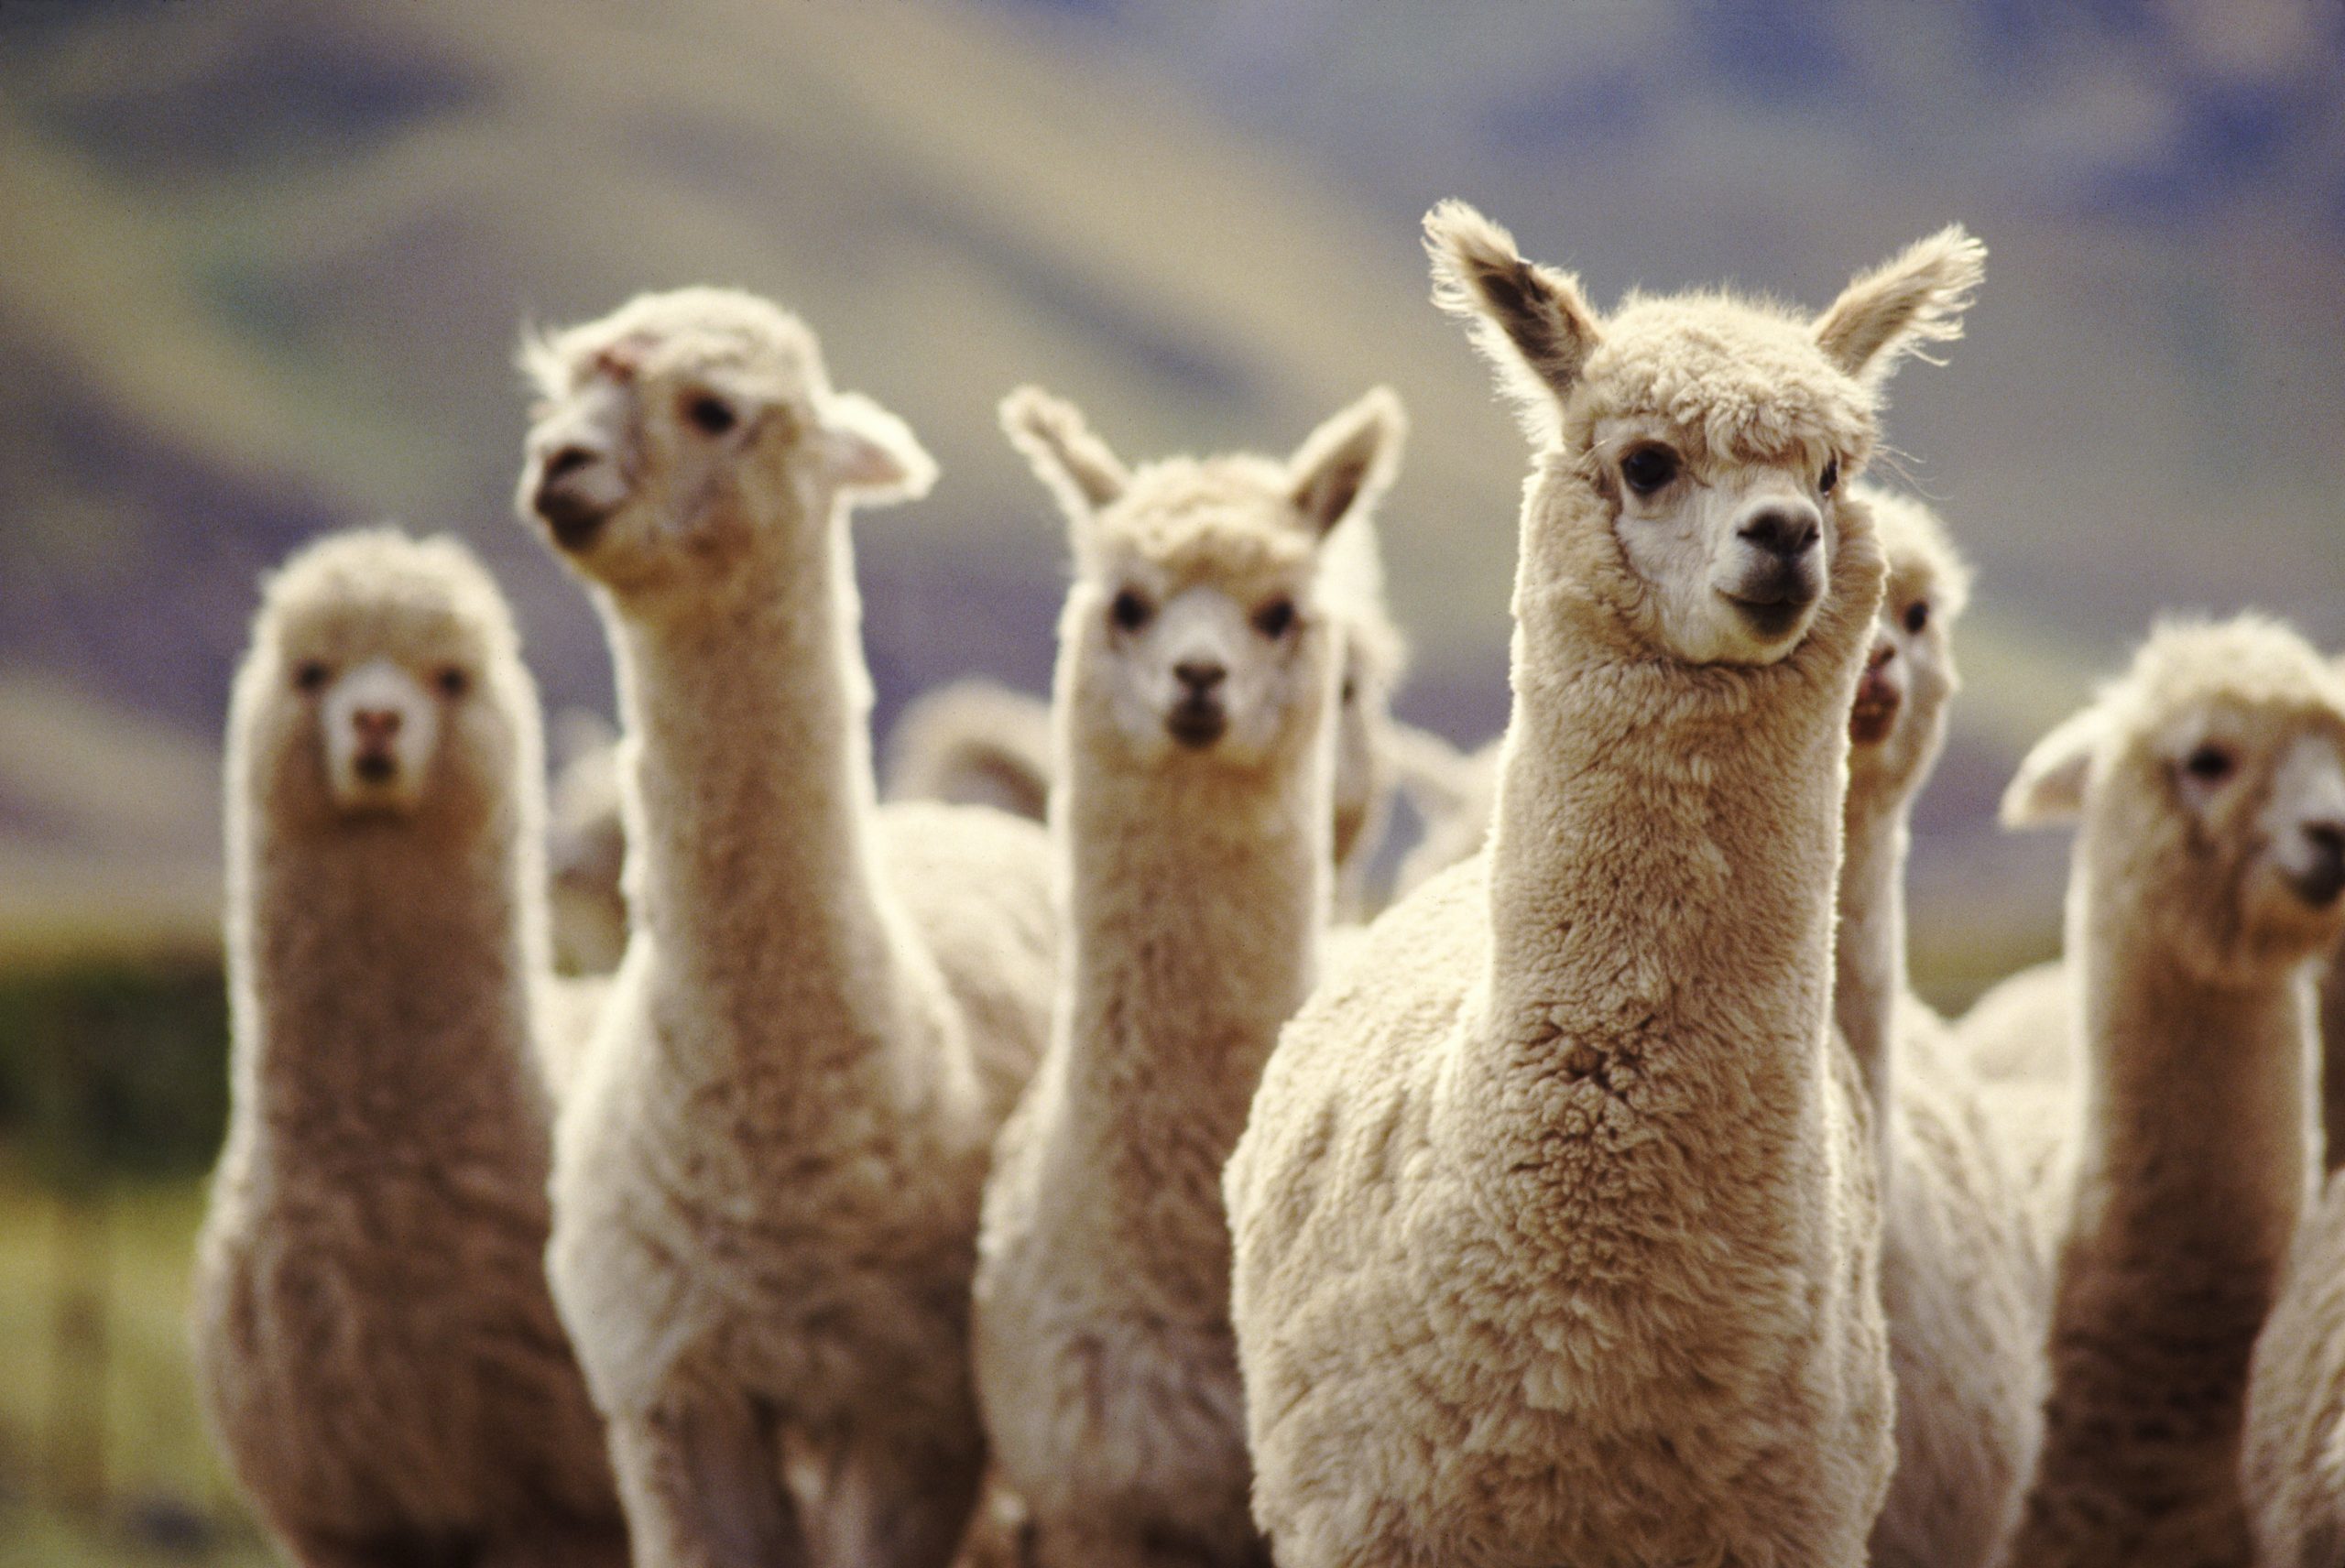 40 Adorable Alpaca Photos to Make You Smile Reader's Digest